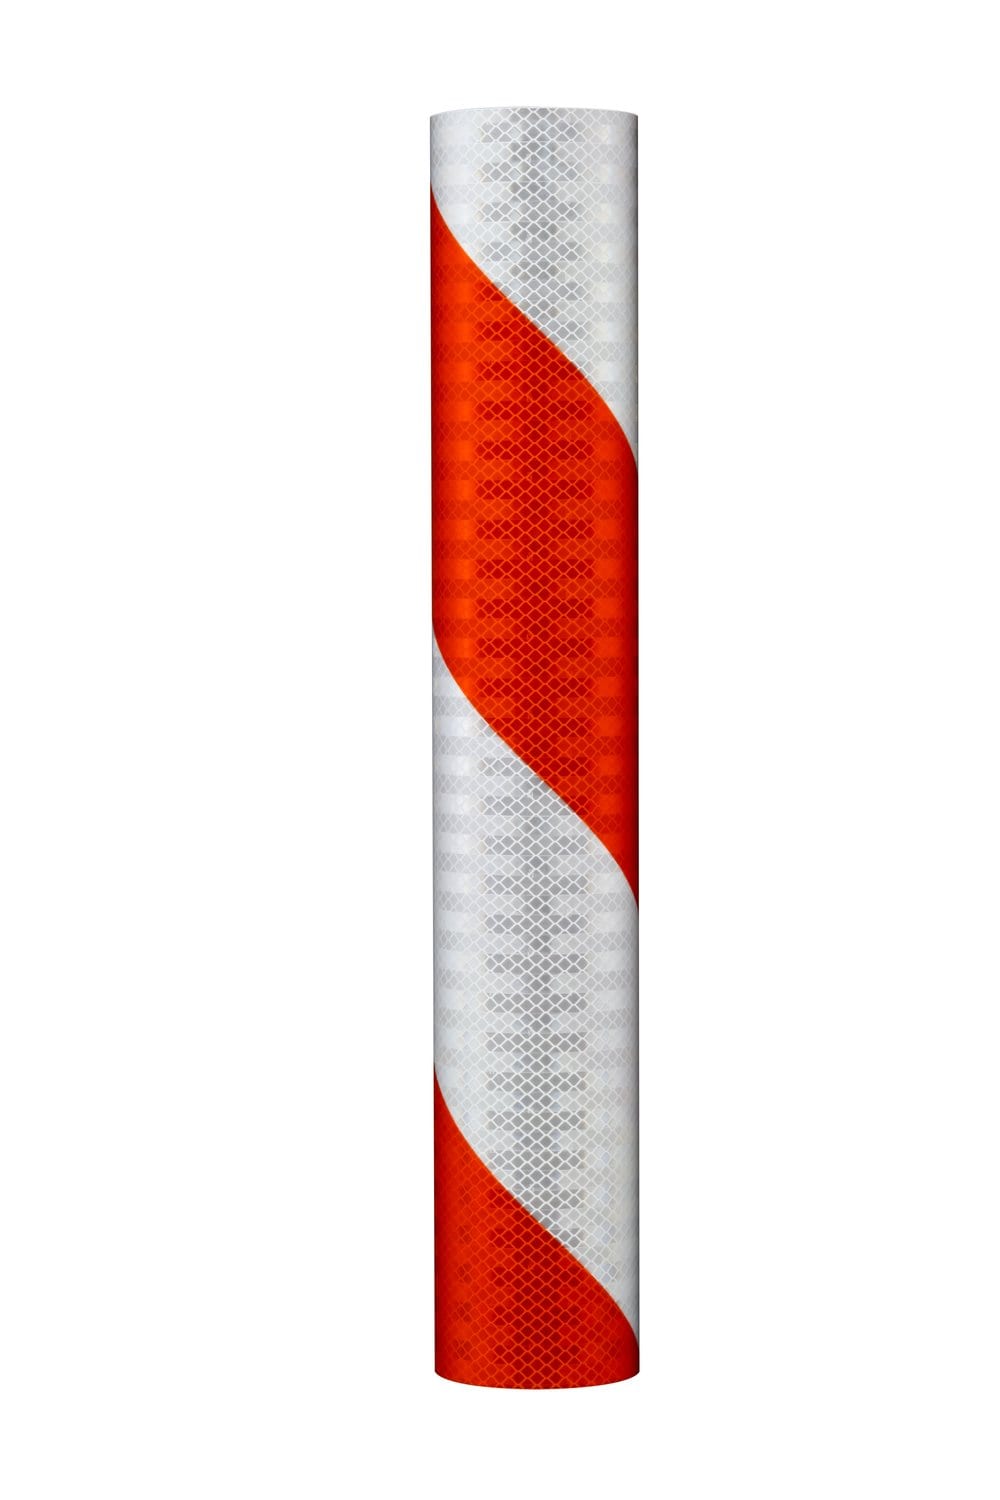 7100011940 - 3M Flexible Prismatic Reflective Barricade Sheeting 3336R Orange/White,
6 in stripe/right, Configurable roll